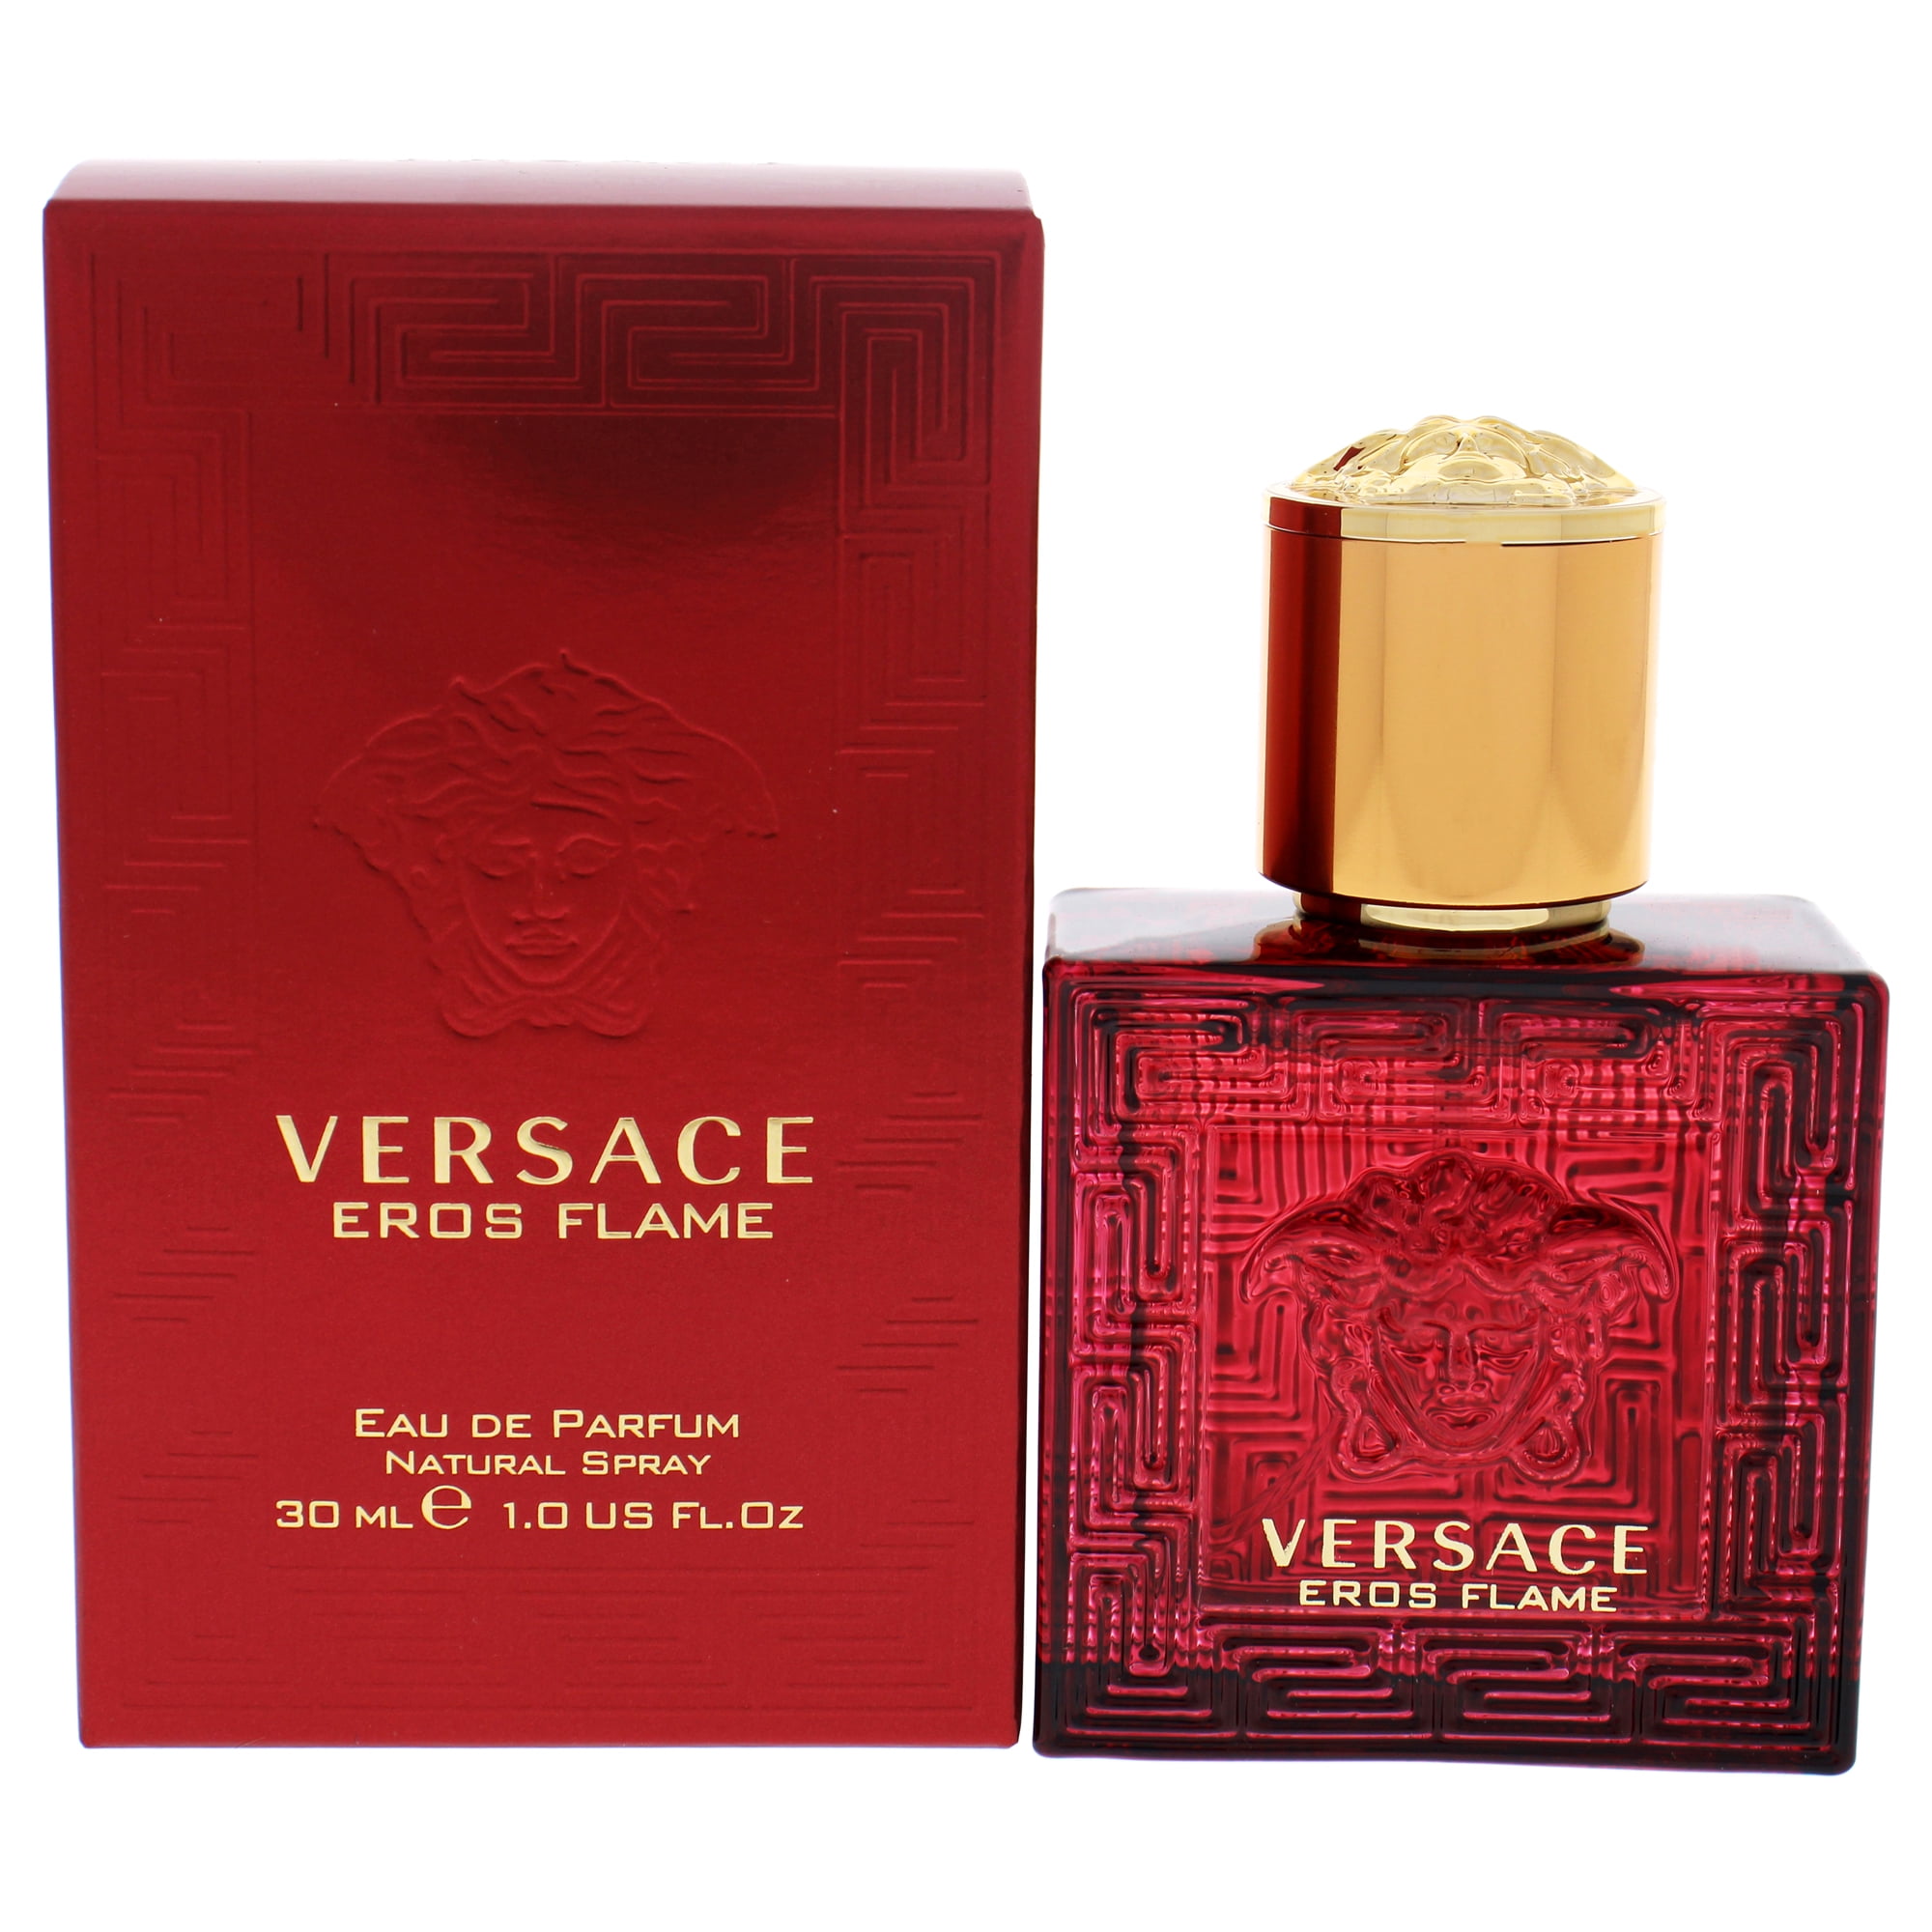 Versace Eros Flame Eau De Parfum Spray Fo Men 1 0 Oz